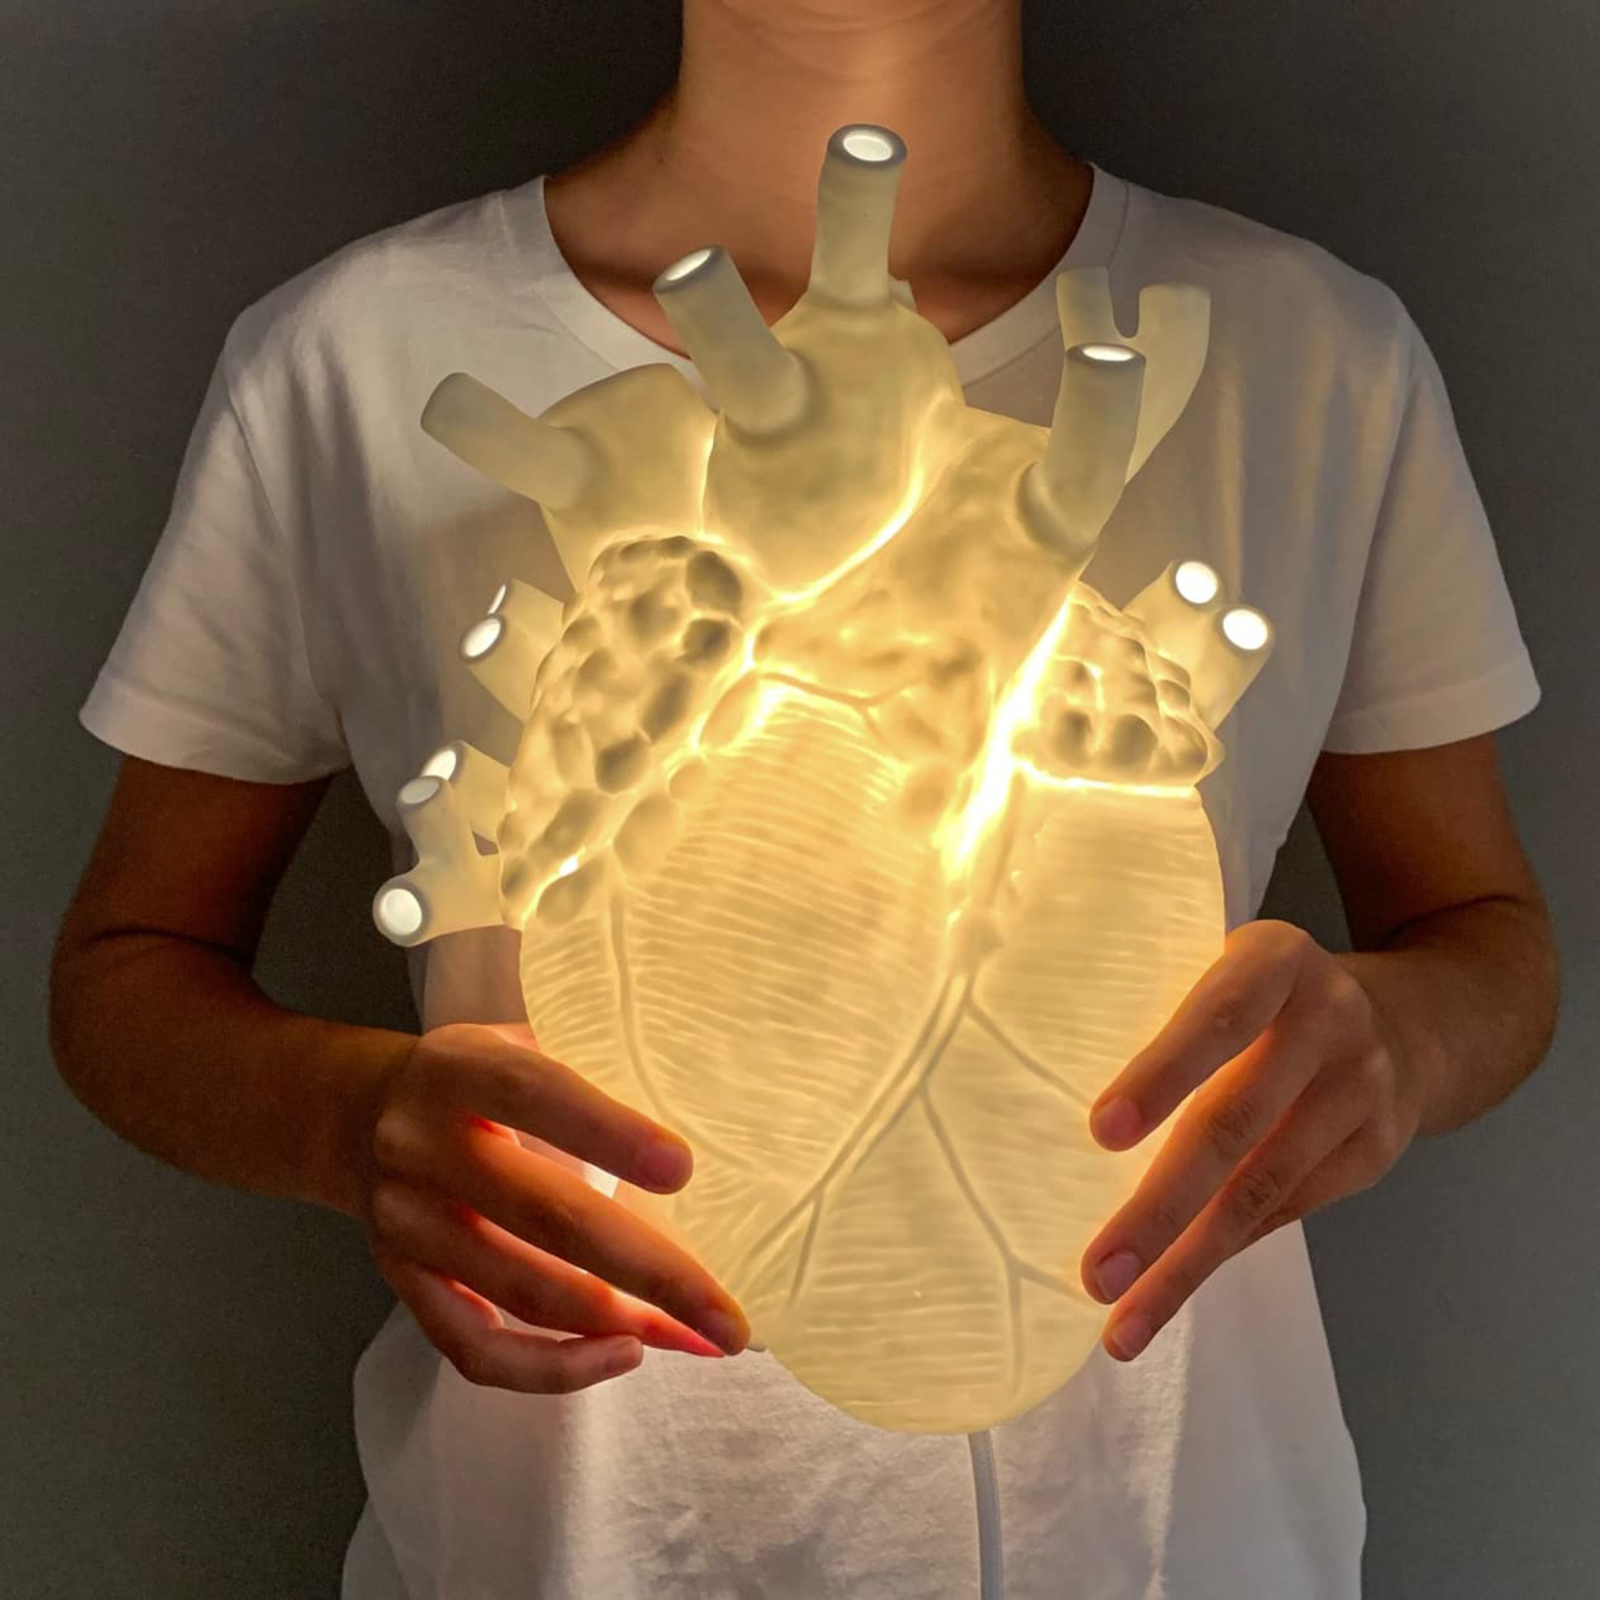 LED wandlamp Heart Lamp van porselein, wit